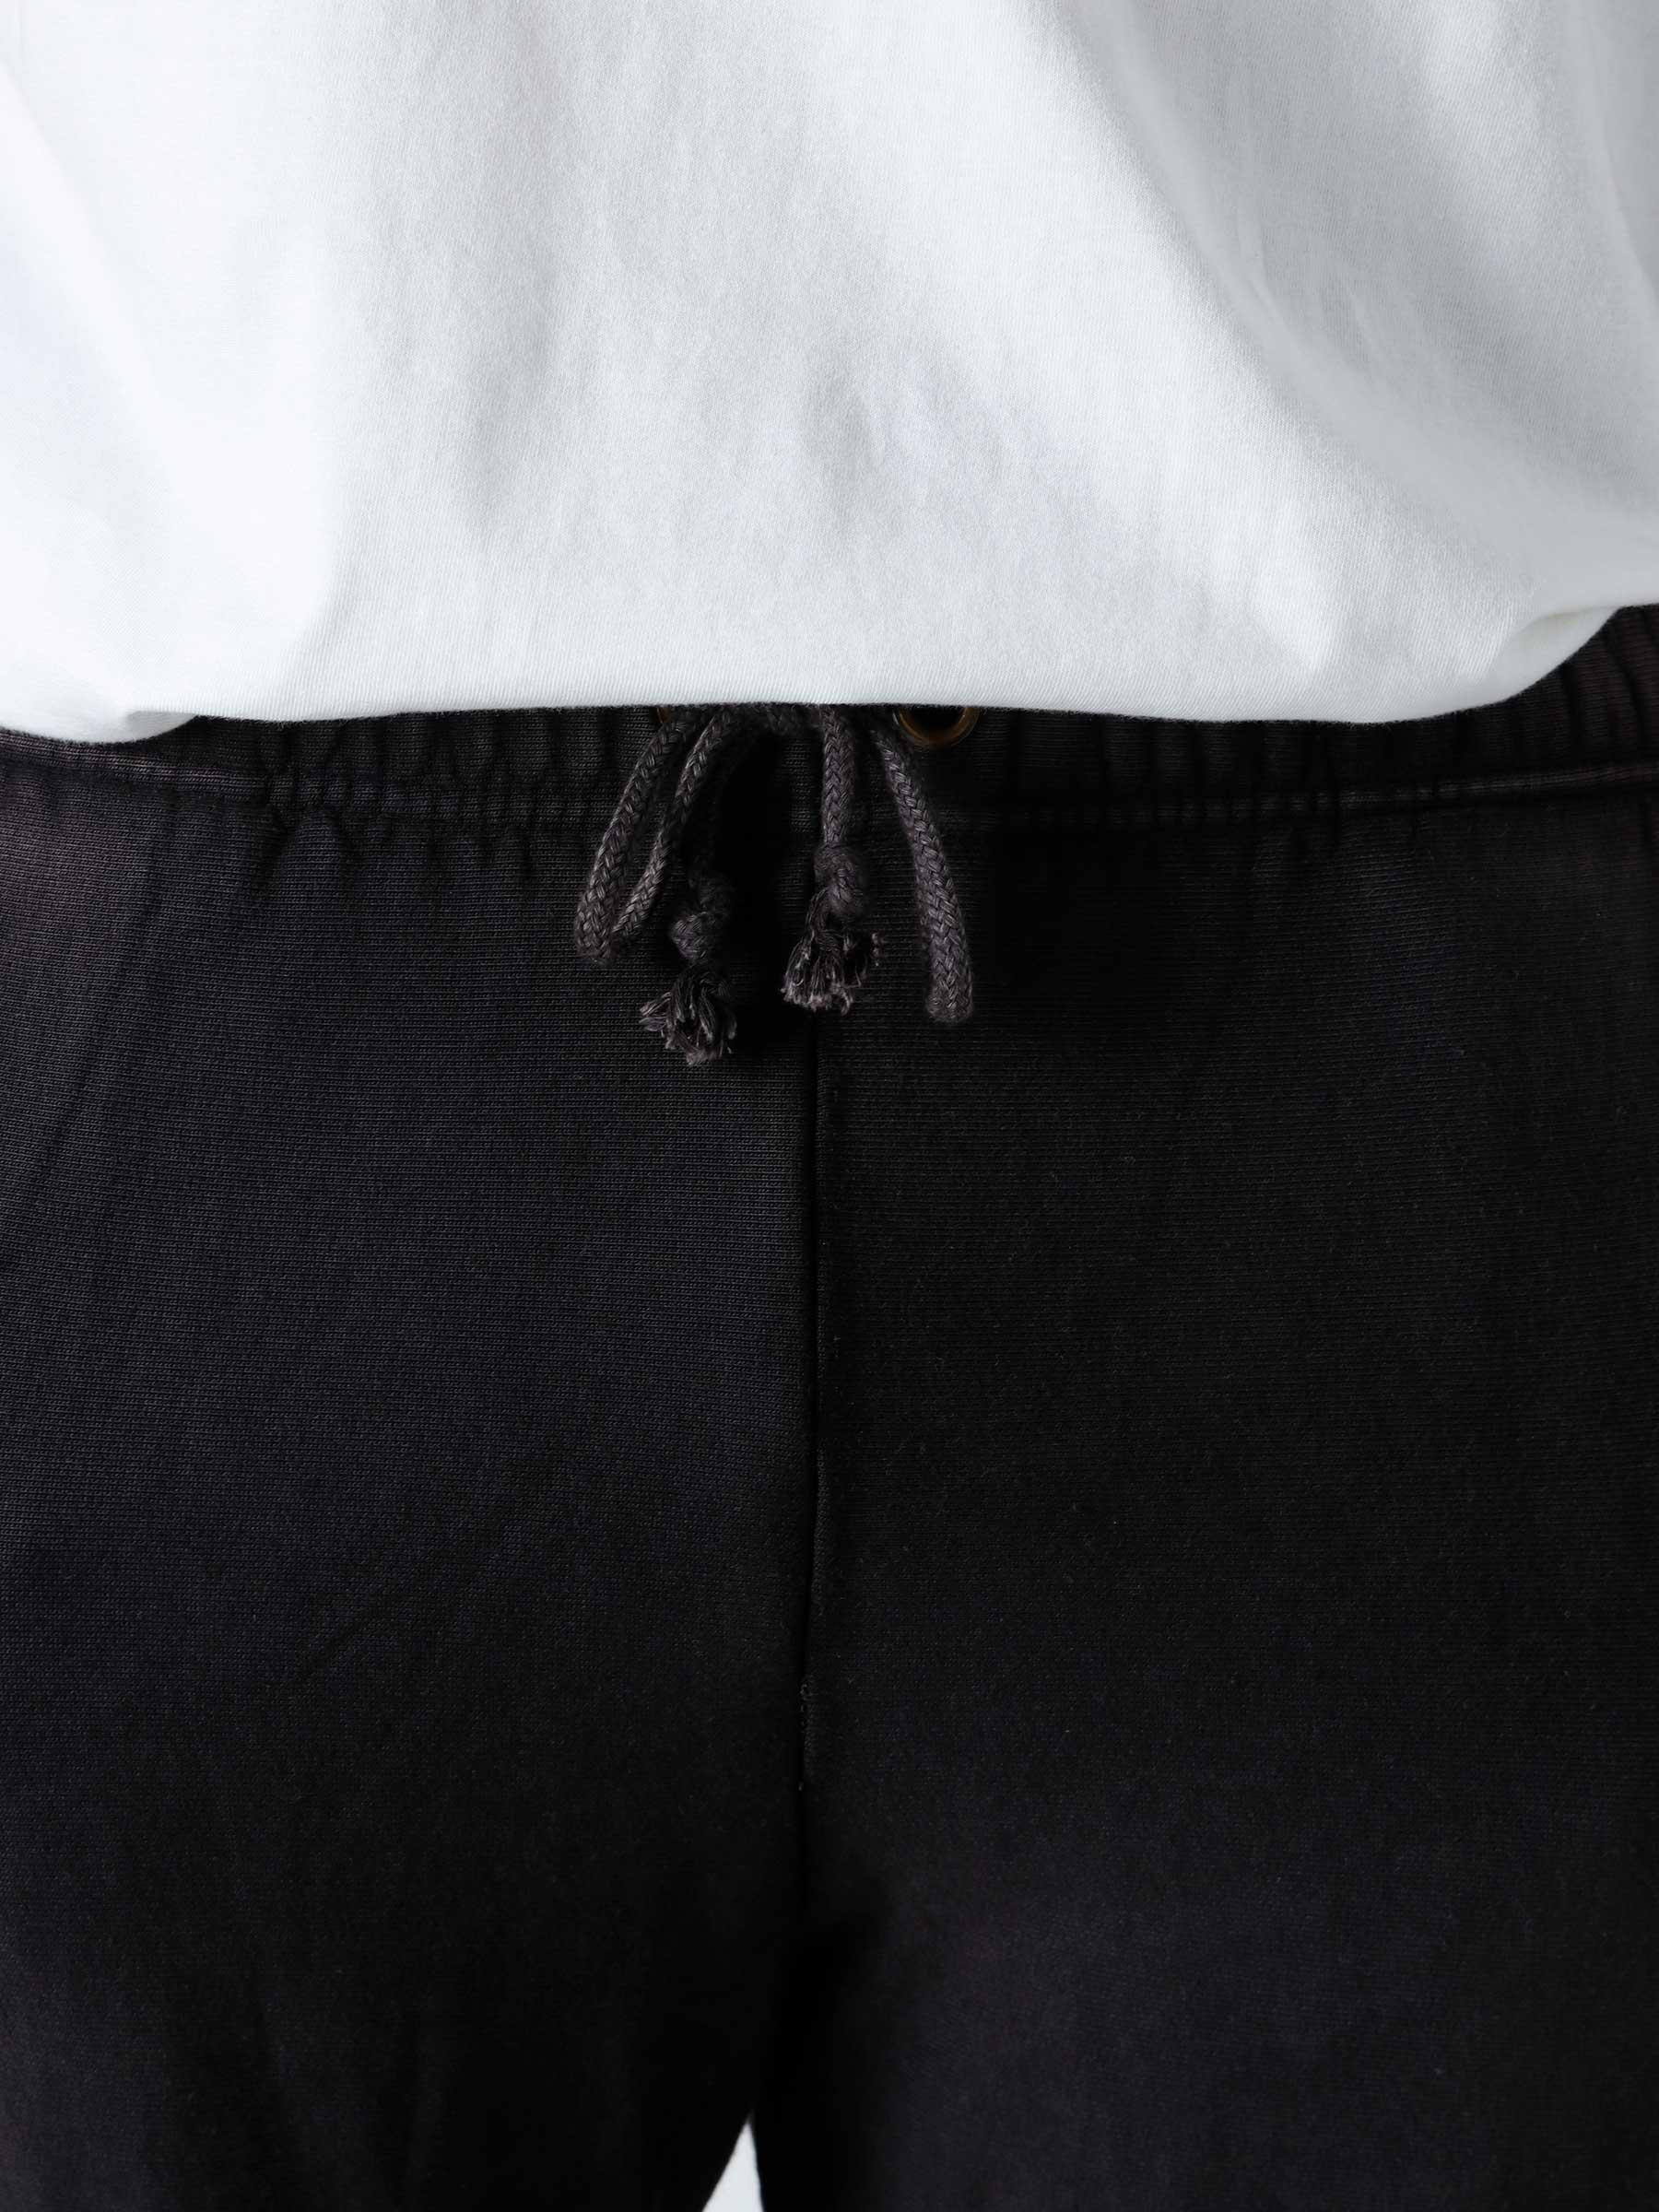 TCV Reverse Weave Poly Terry  Elastic Cuff Pants Black 217242-KK001